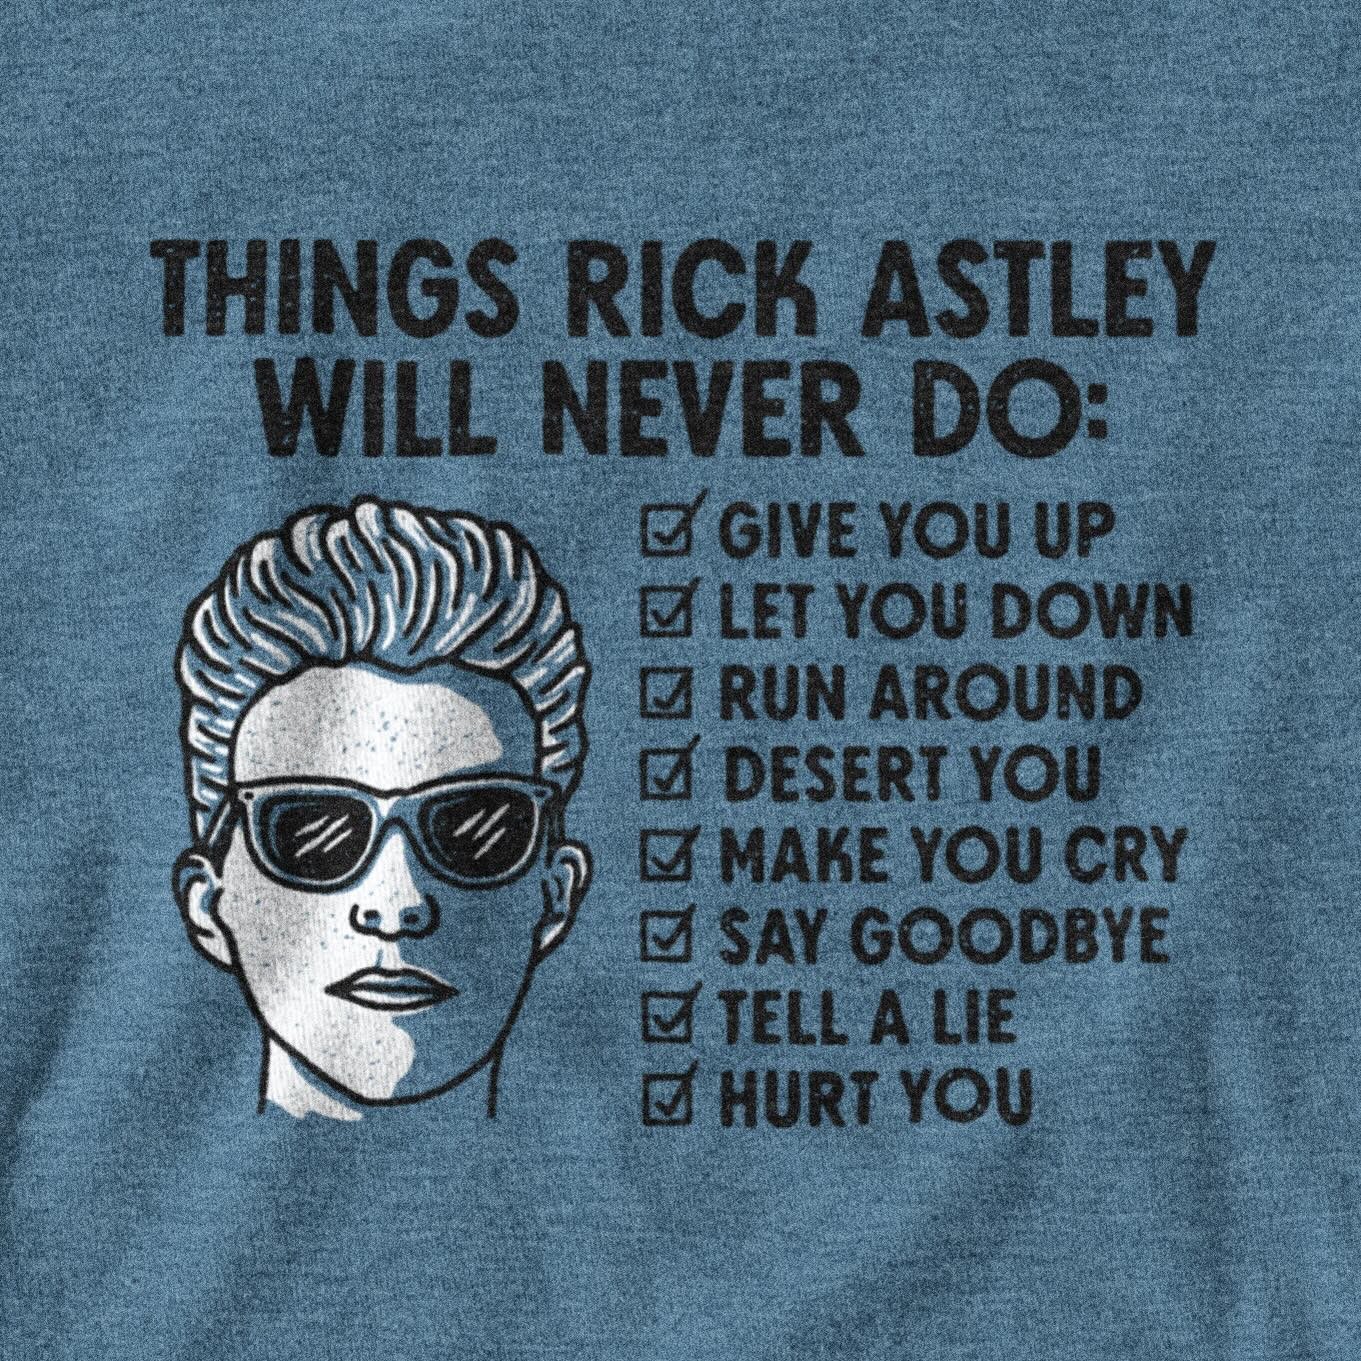 Be like Rick Astley